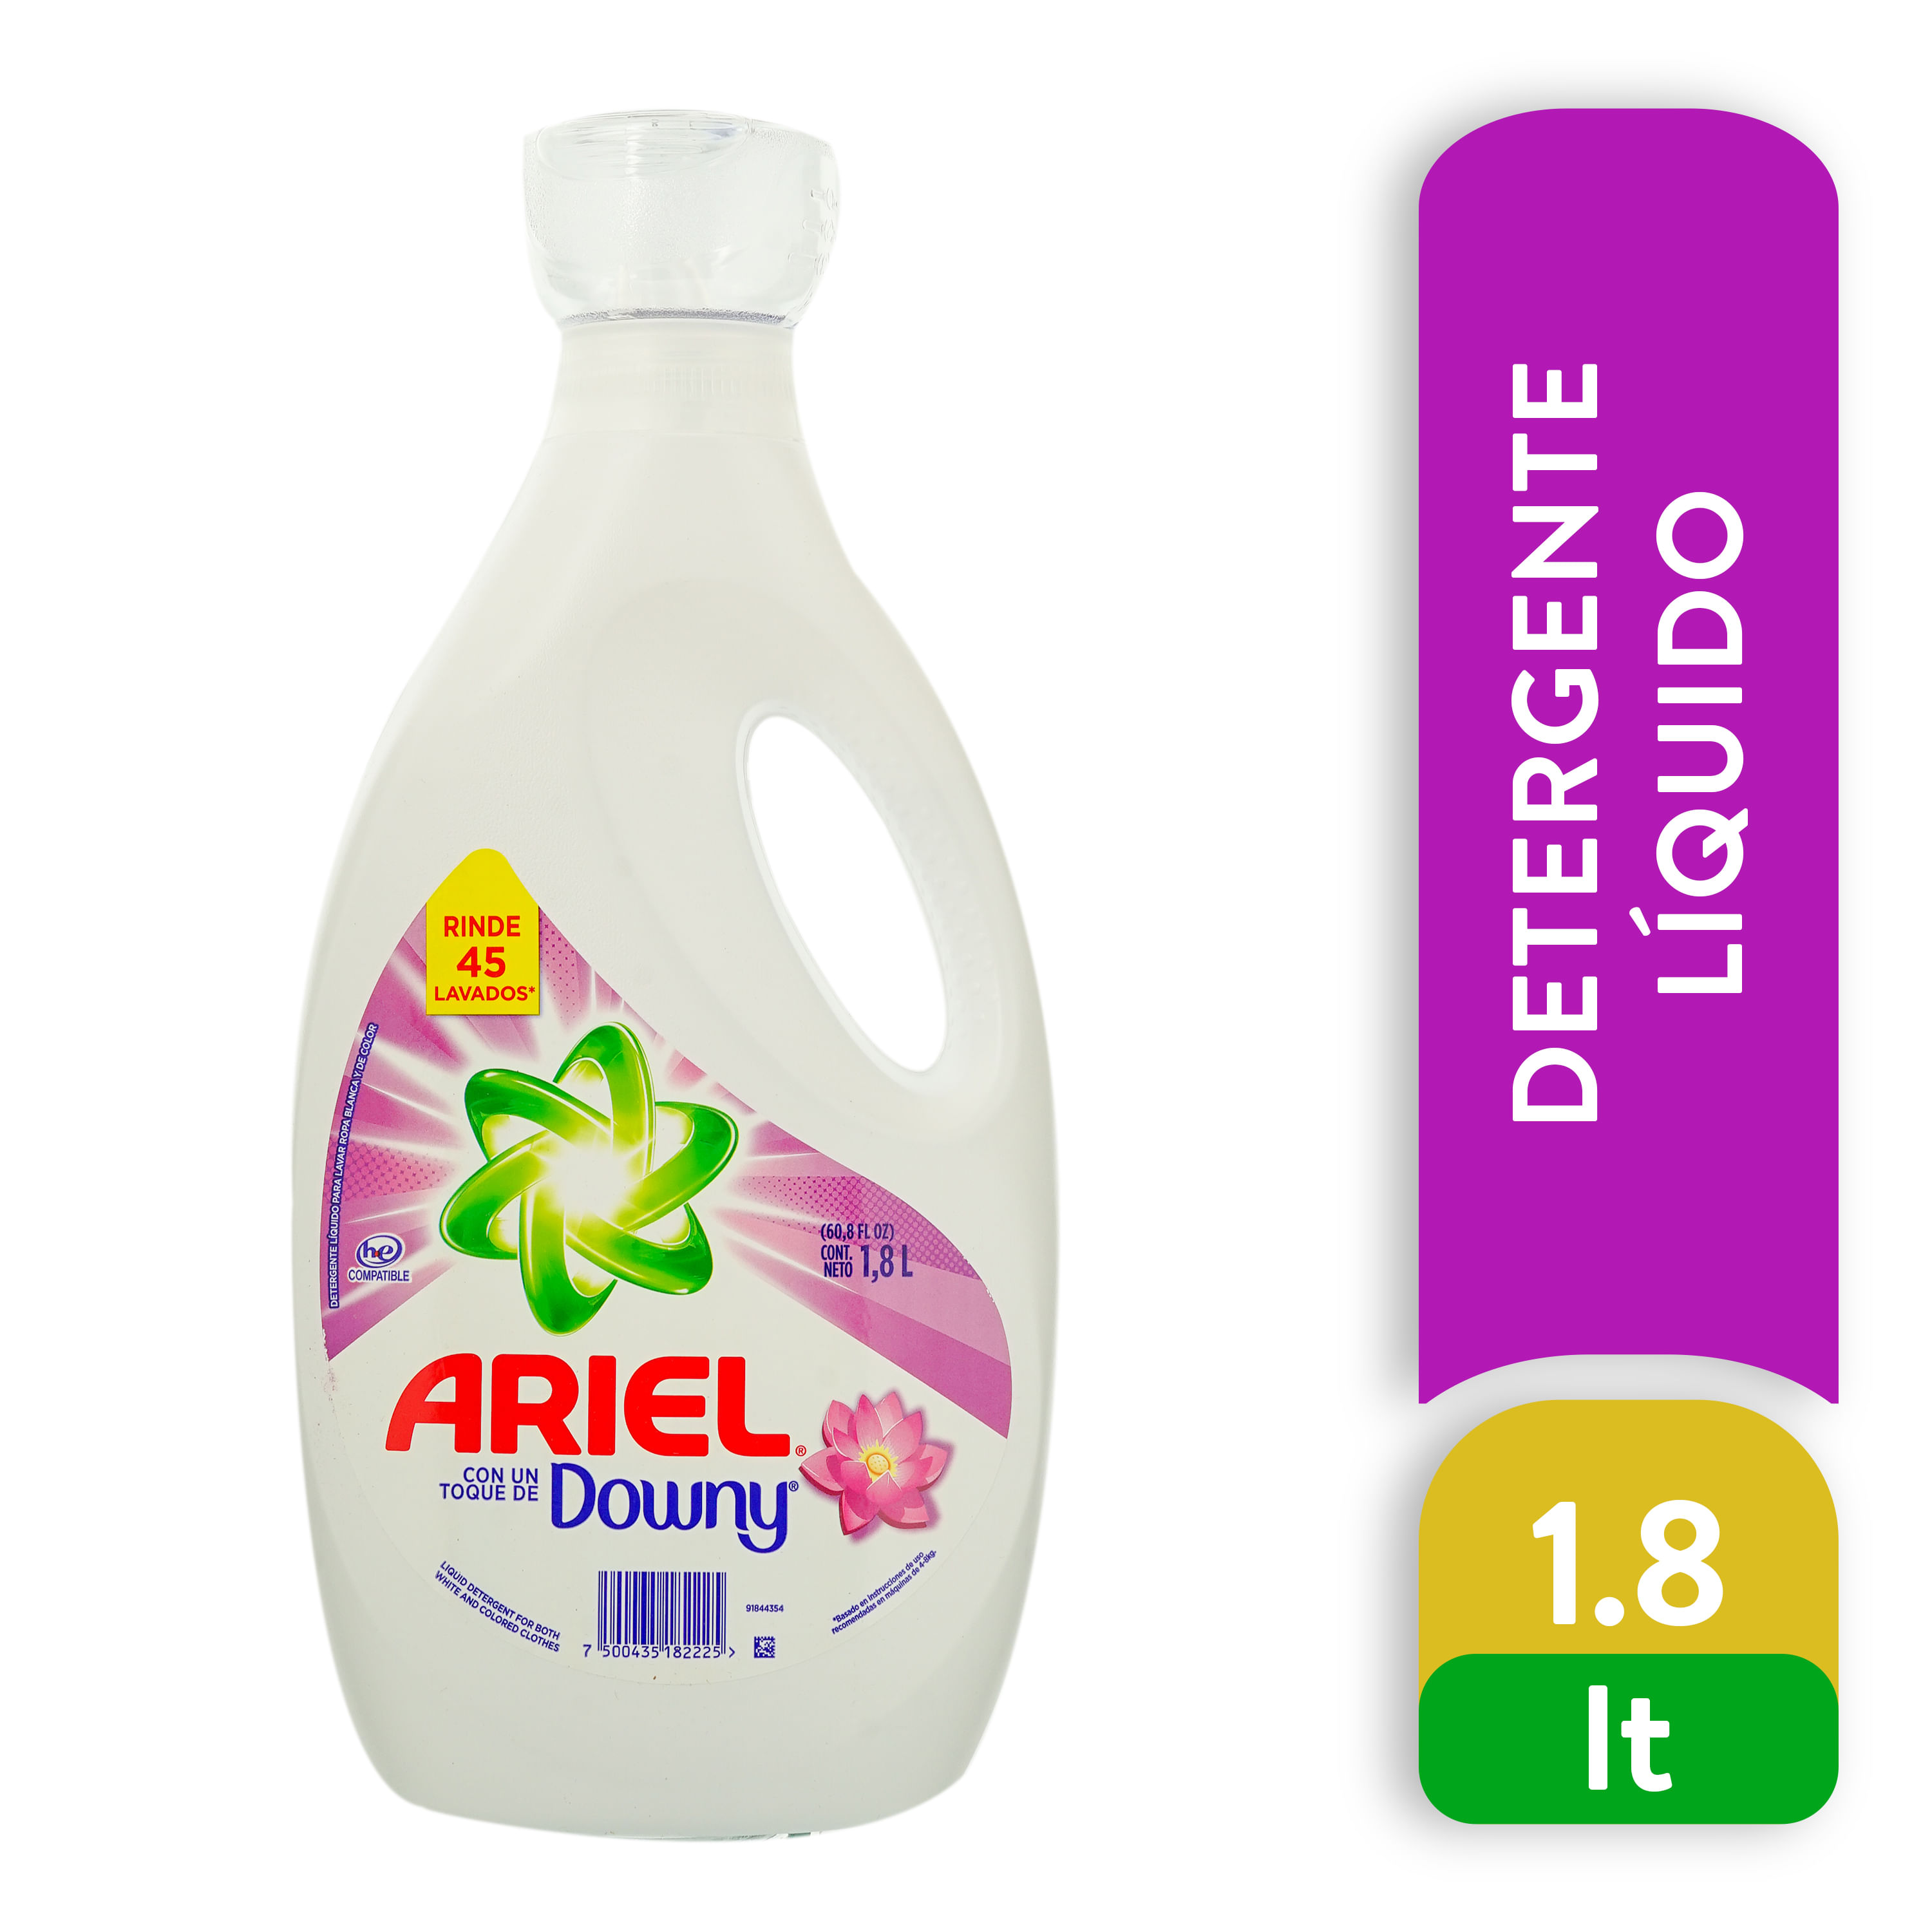 Detergente Líquido Ariel Doble Poder 1,8 litros – Blades cl